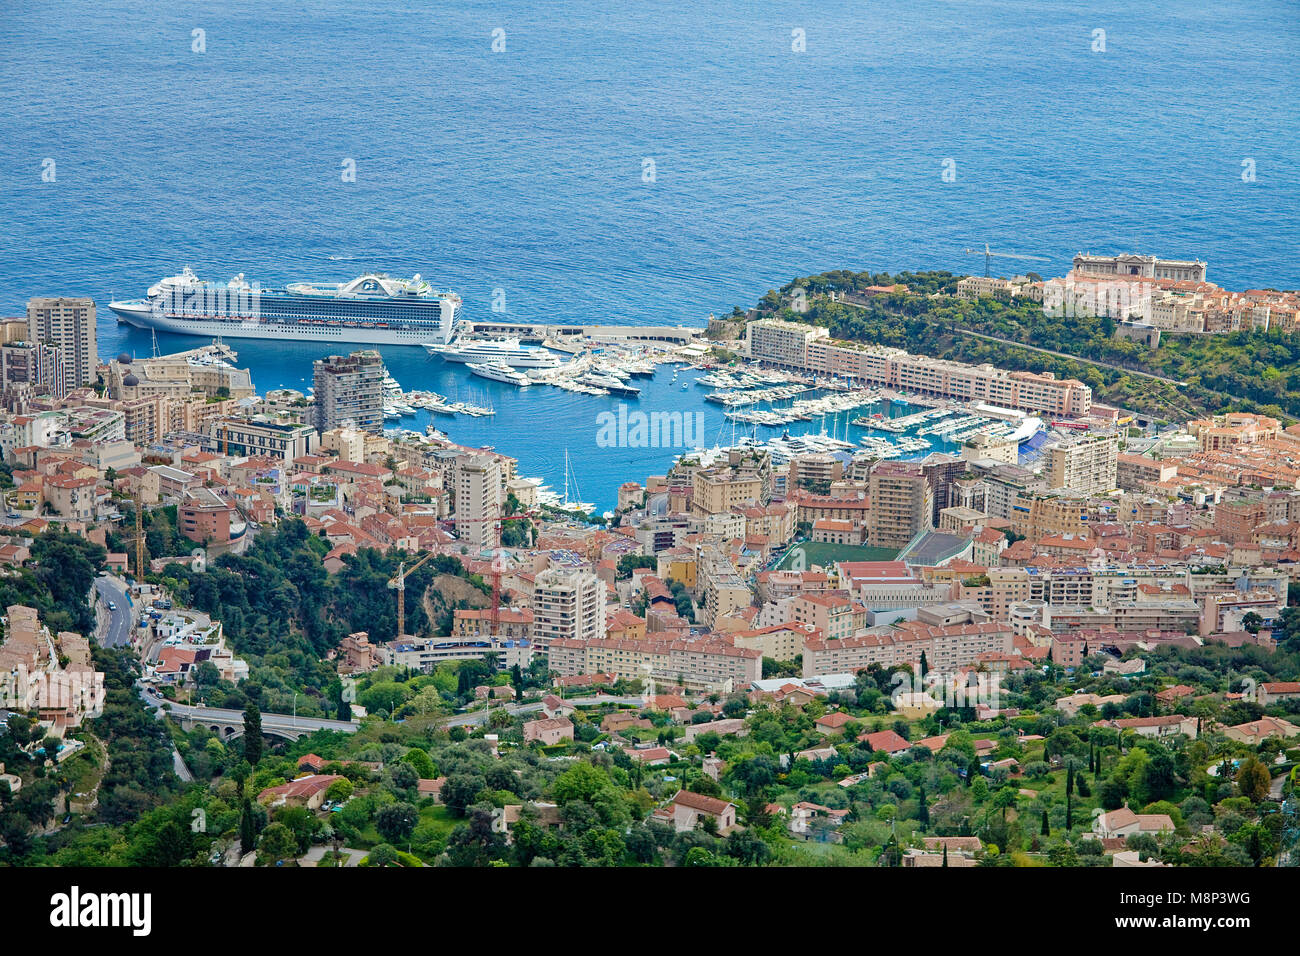 Kreuzfahrtschiff im Hafen von Monaco, Fuerstentum Monaco, Europa | Cruise liner at harbour of Monaco, Principality of Monaco, Europa Stock Photo